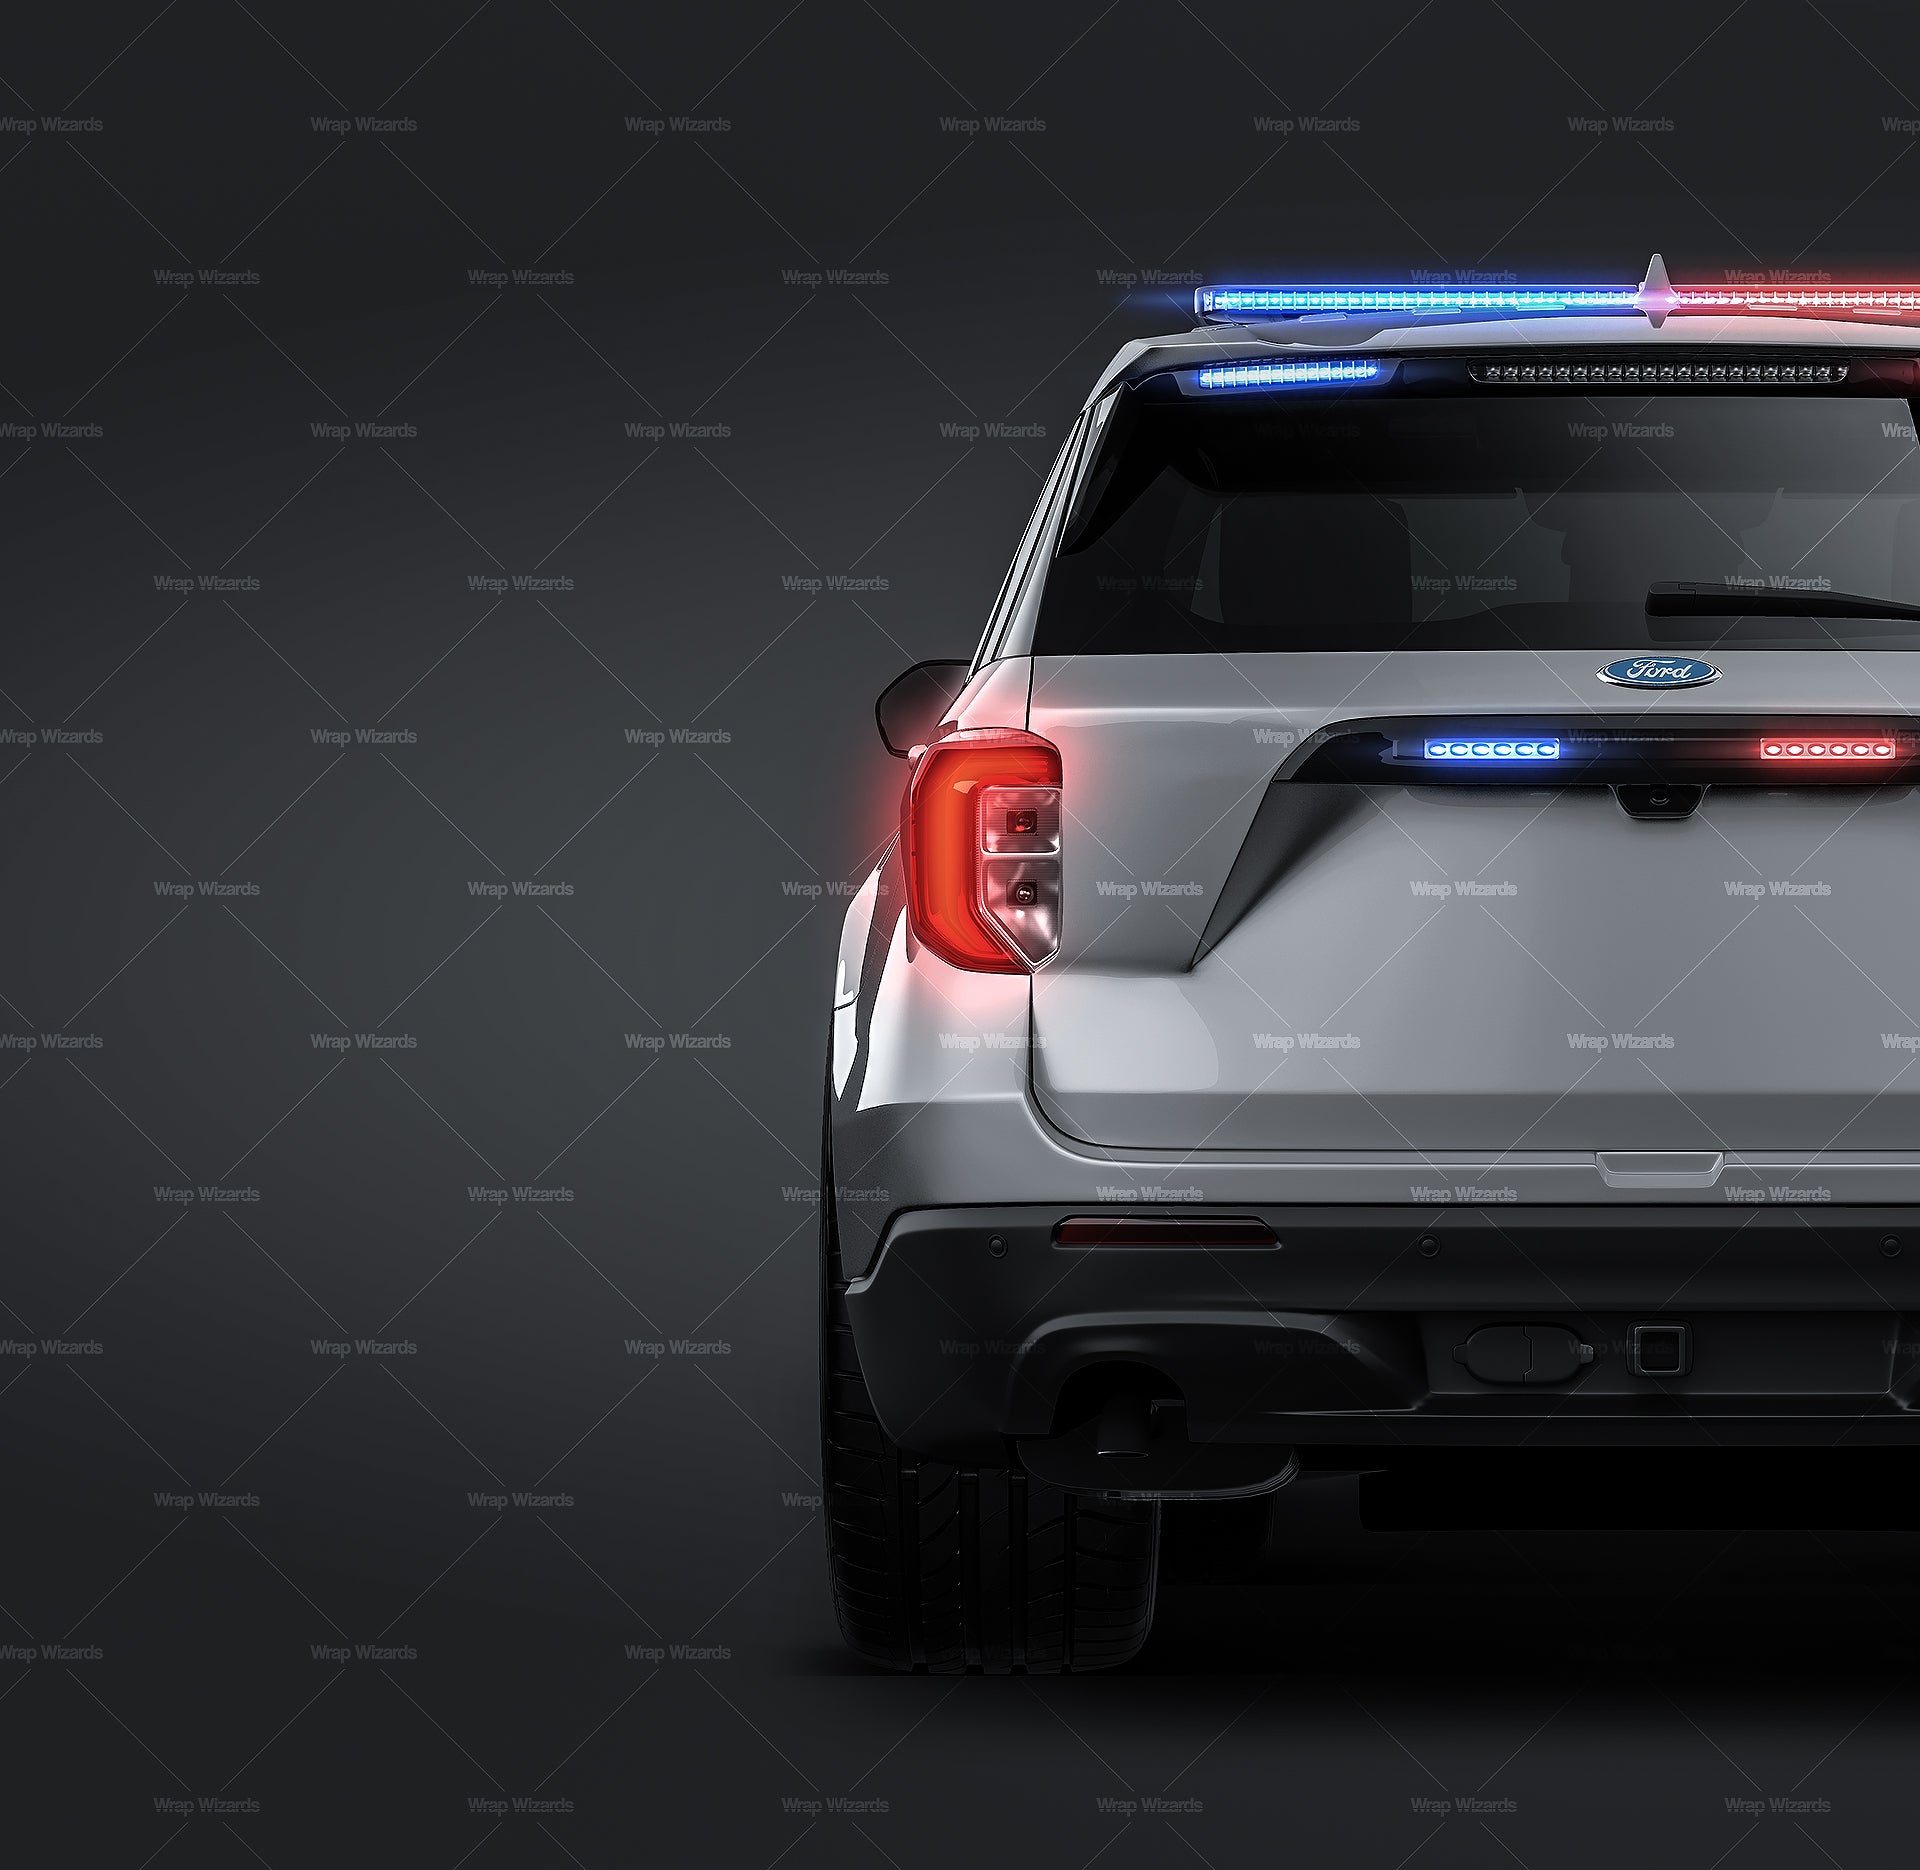 Ford Explorer 2020 Police Interceptor glossy finish - all sides Car Mockup Template.psd